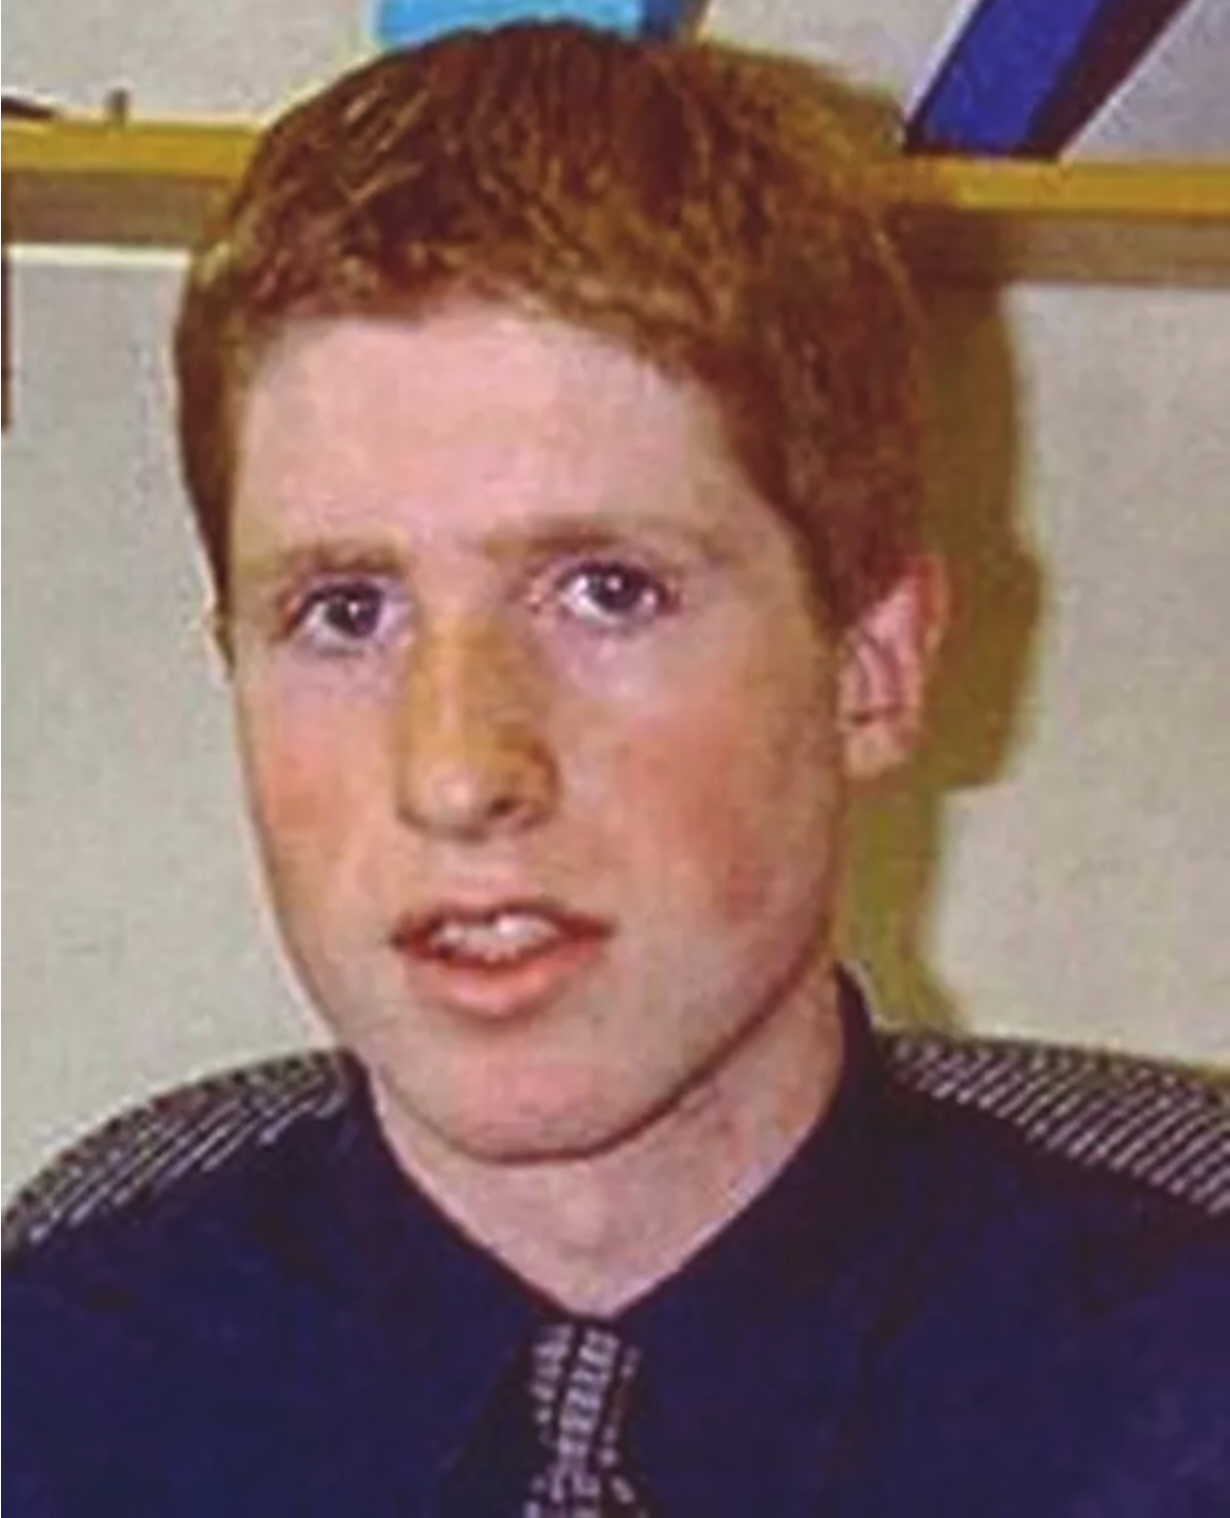 Trevor Deely - Missing since 12/8/2000